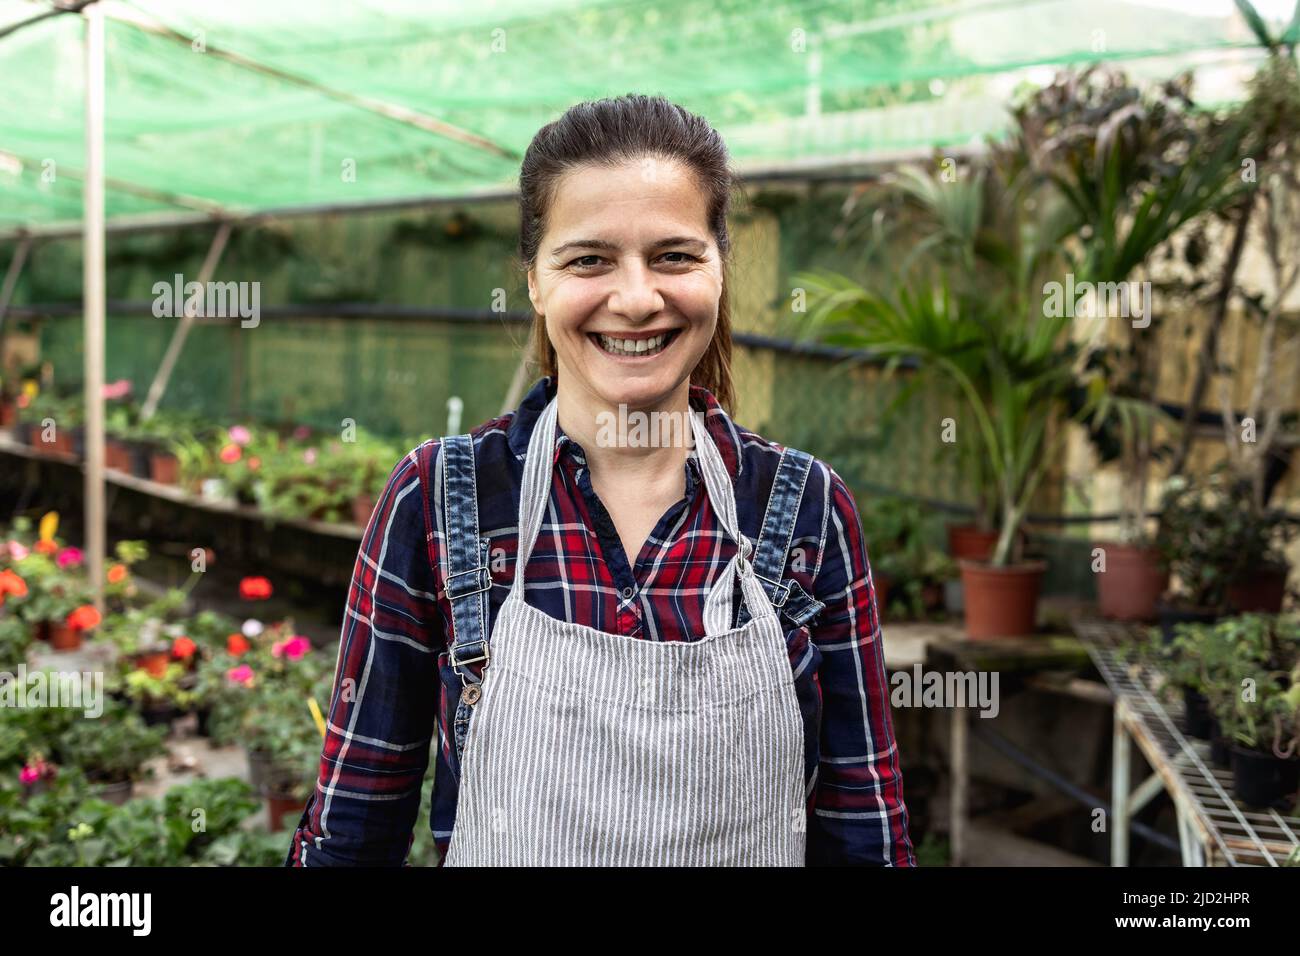 Happy smiling woman working in flower garden shop Stock Photo